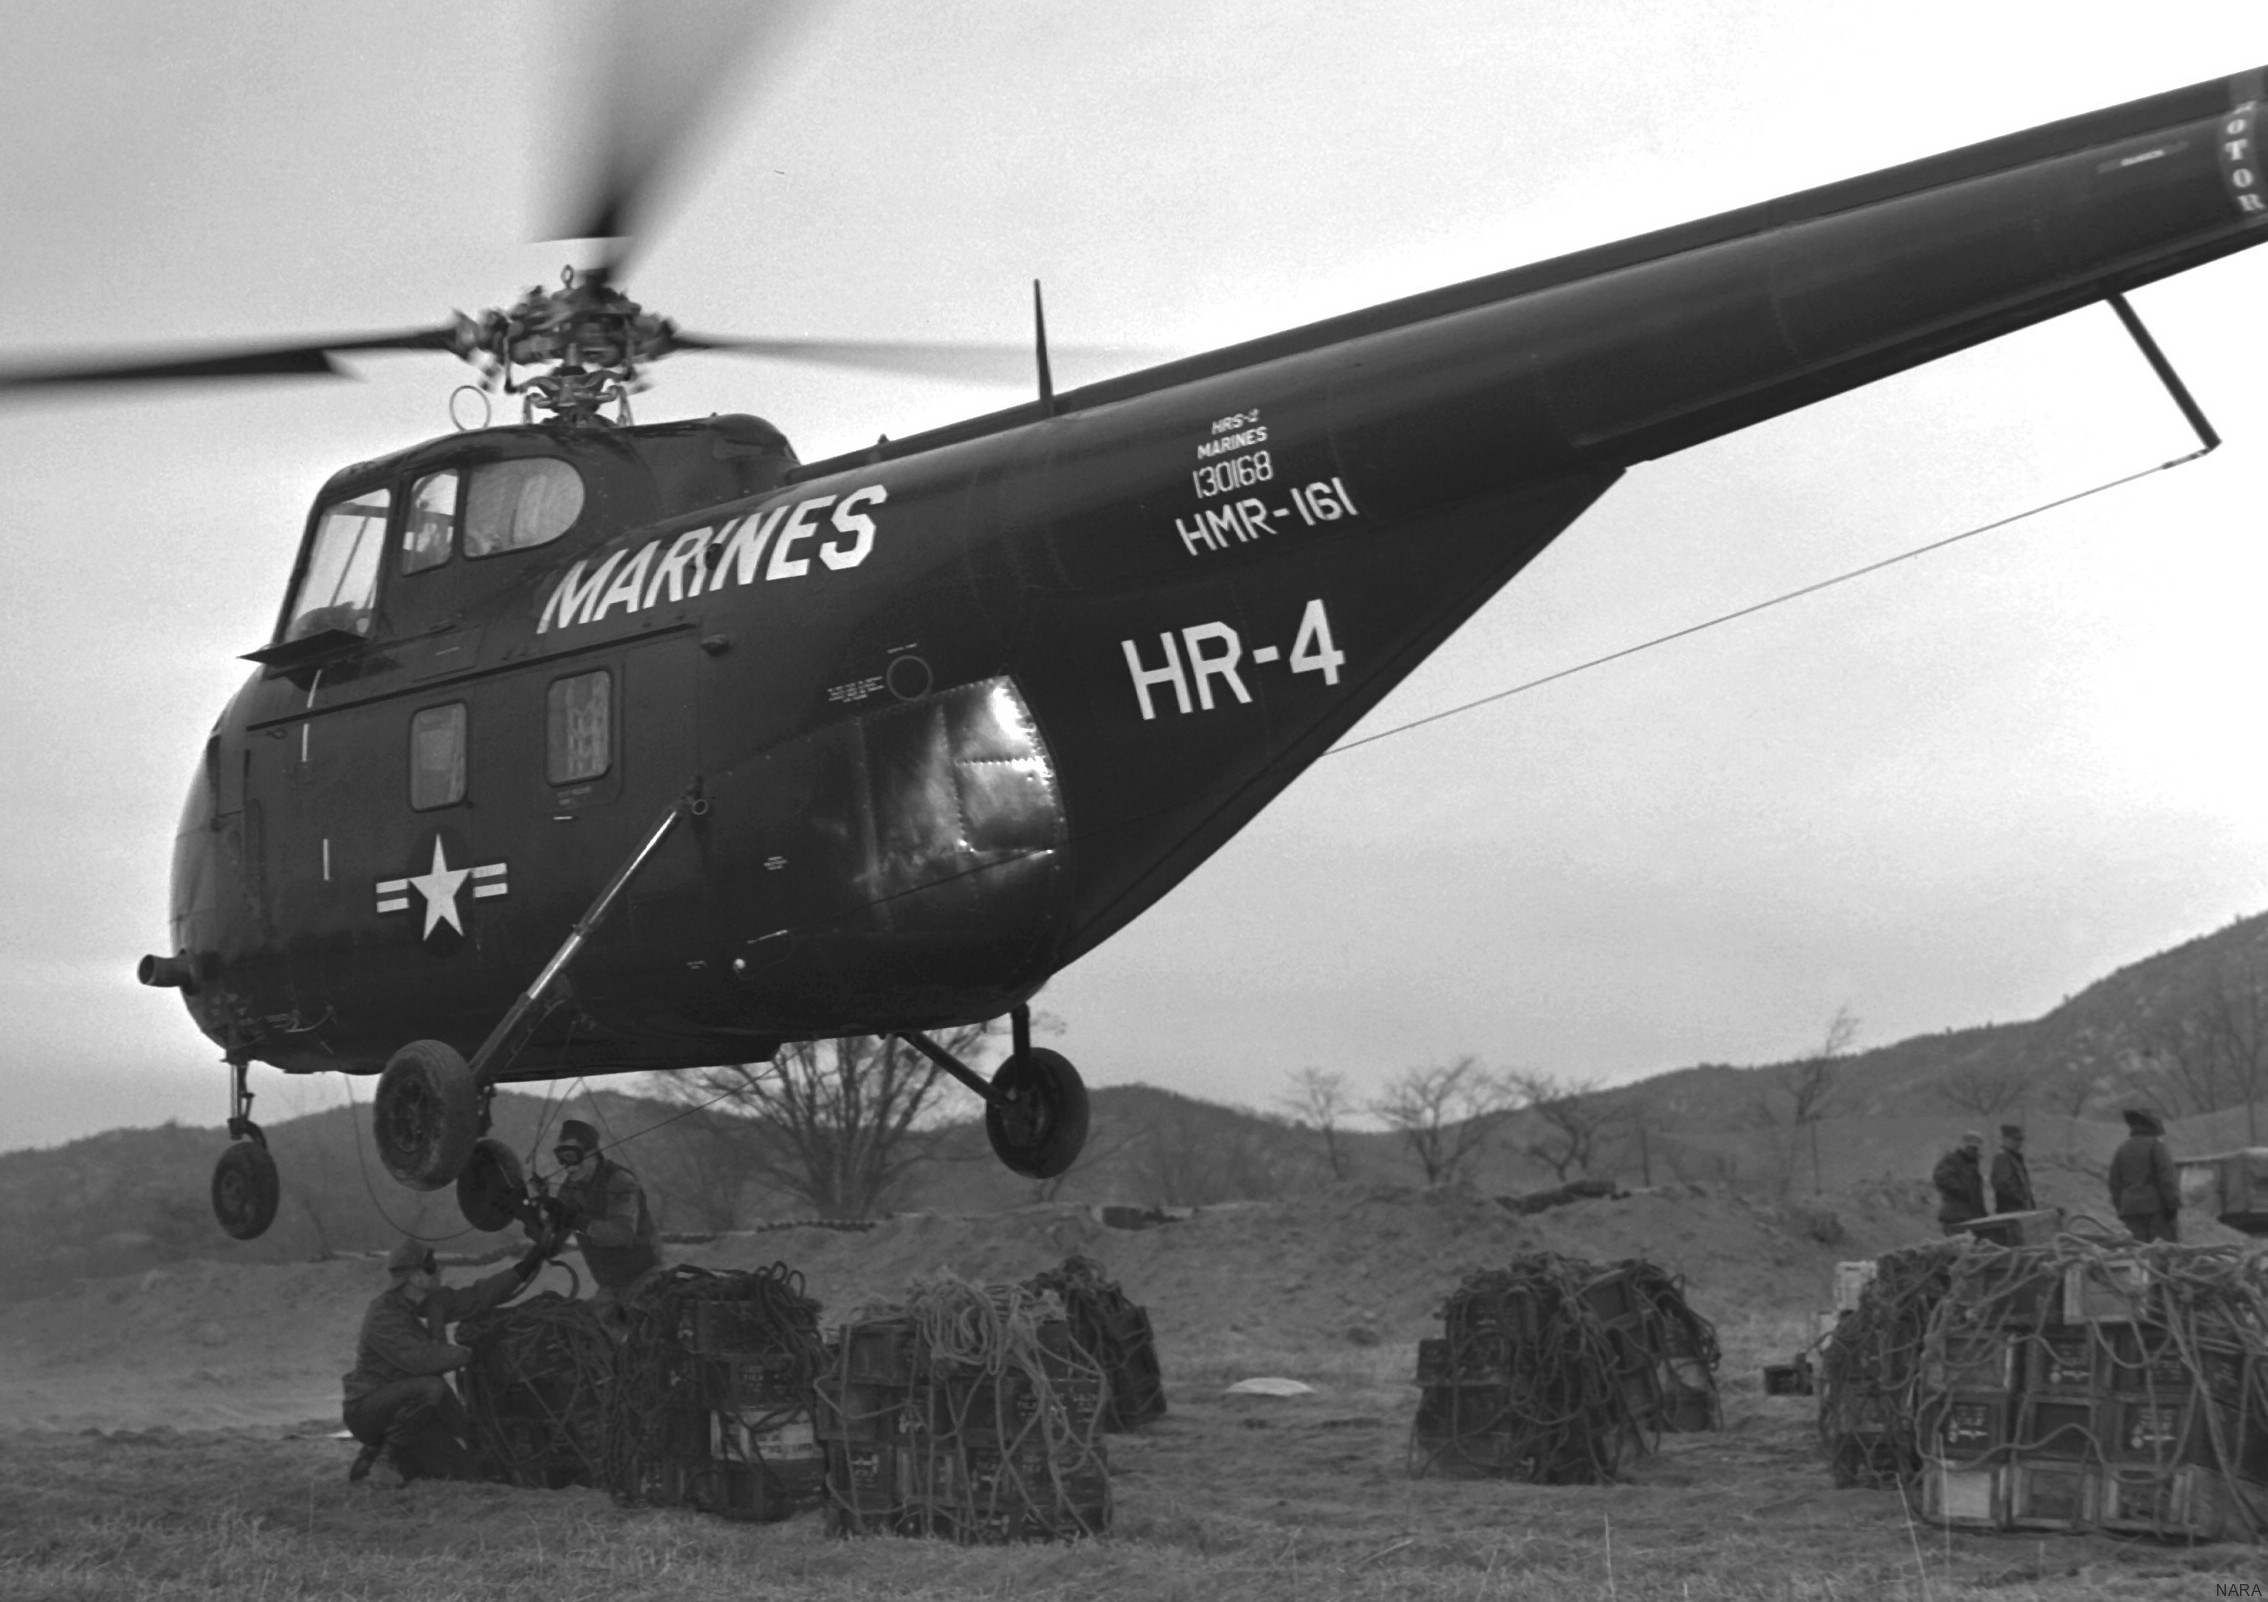 hmr-161 greyhawks marine helicopter transport squadron sikorsky hrs-2 usmc 21 korean war